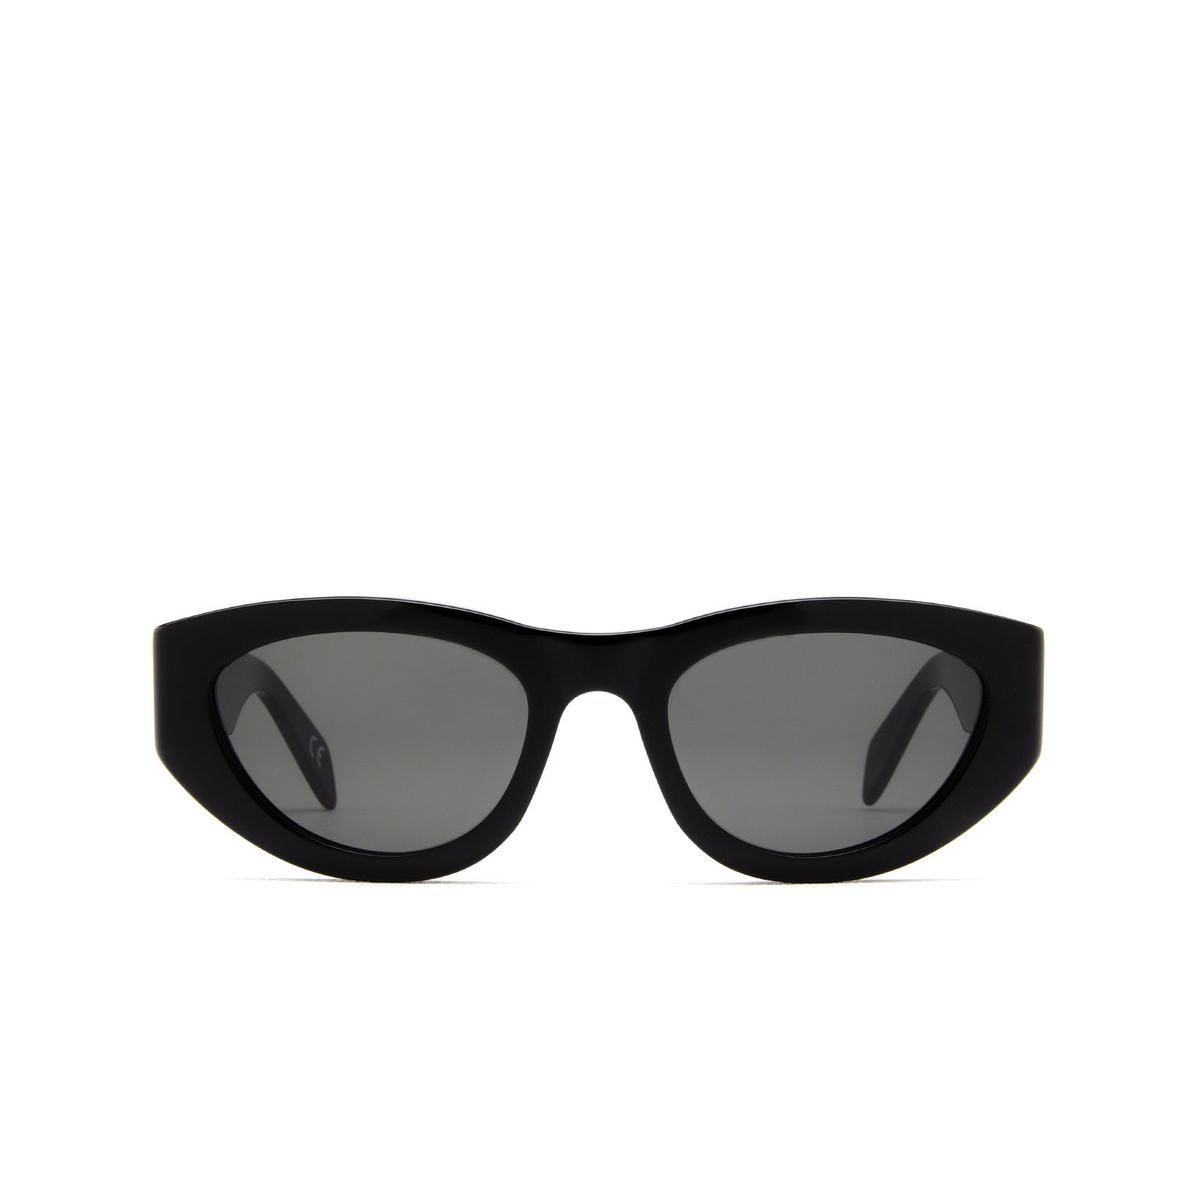 Marni RAINBOW MOUNTAINS Sunglasses BMO Black - front view